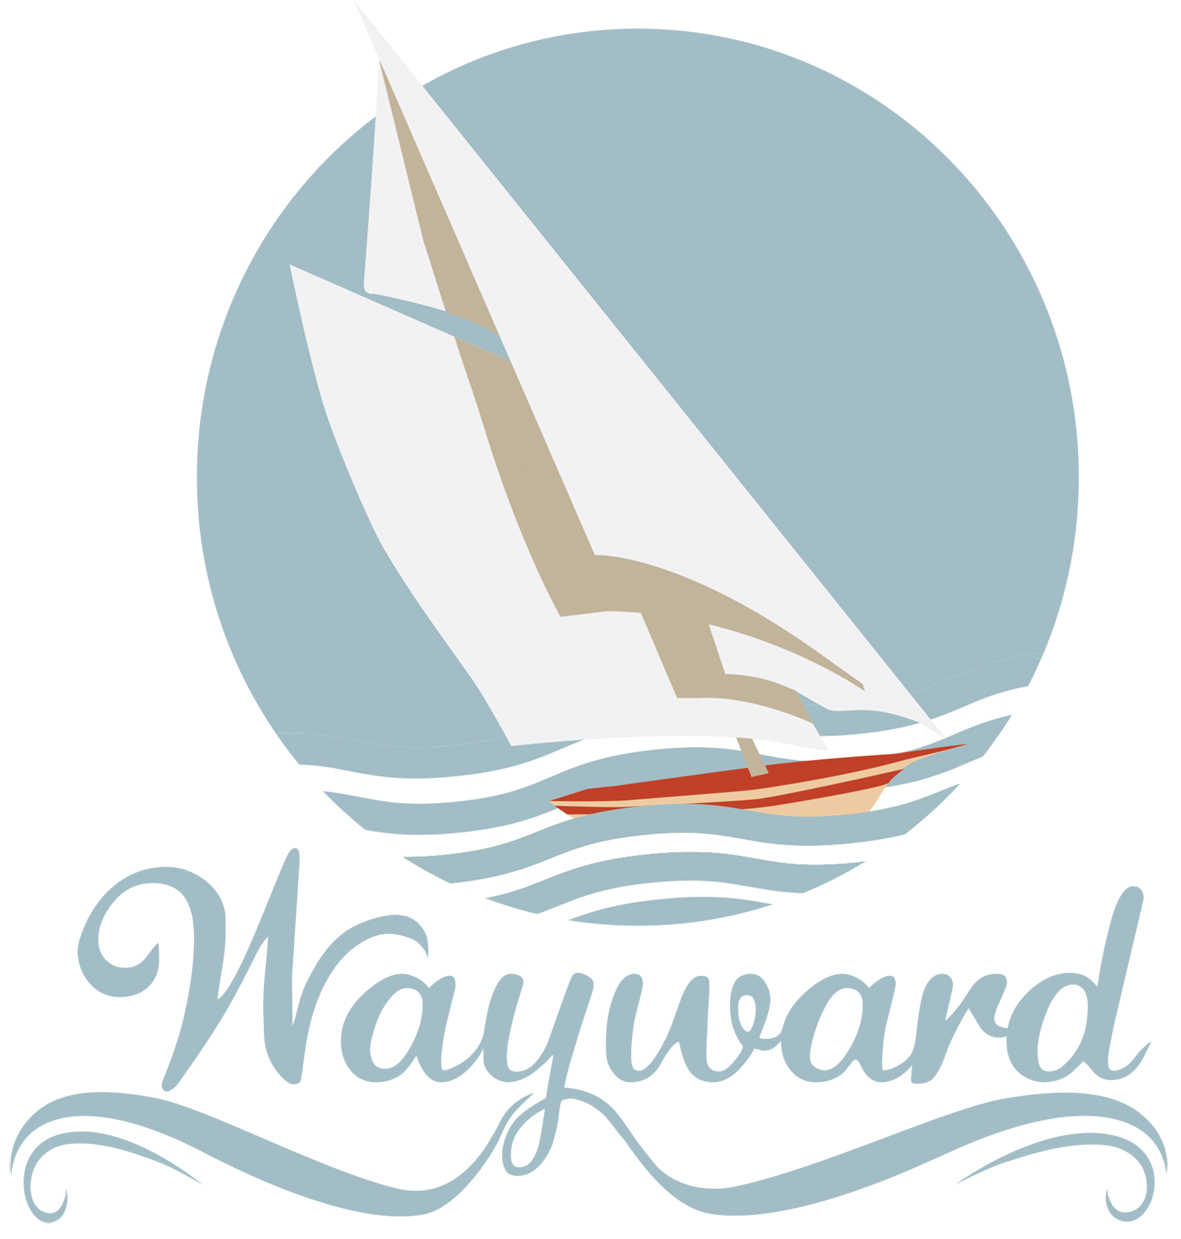 branding  wayward haberdashery shop logo logo Signage